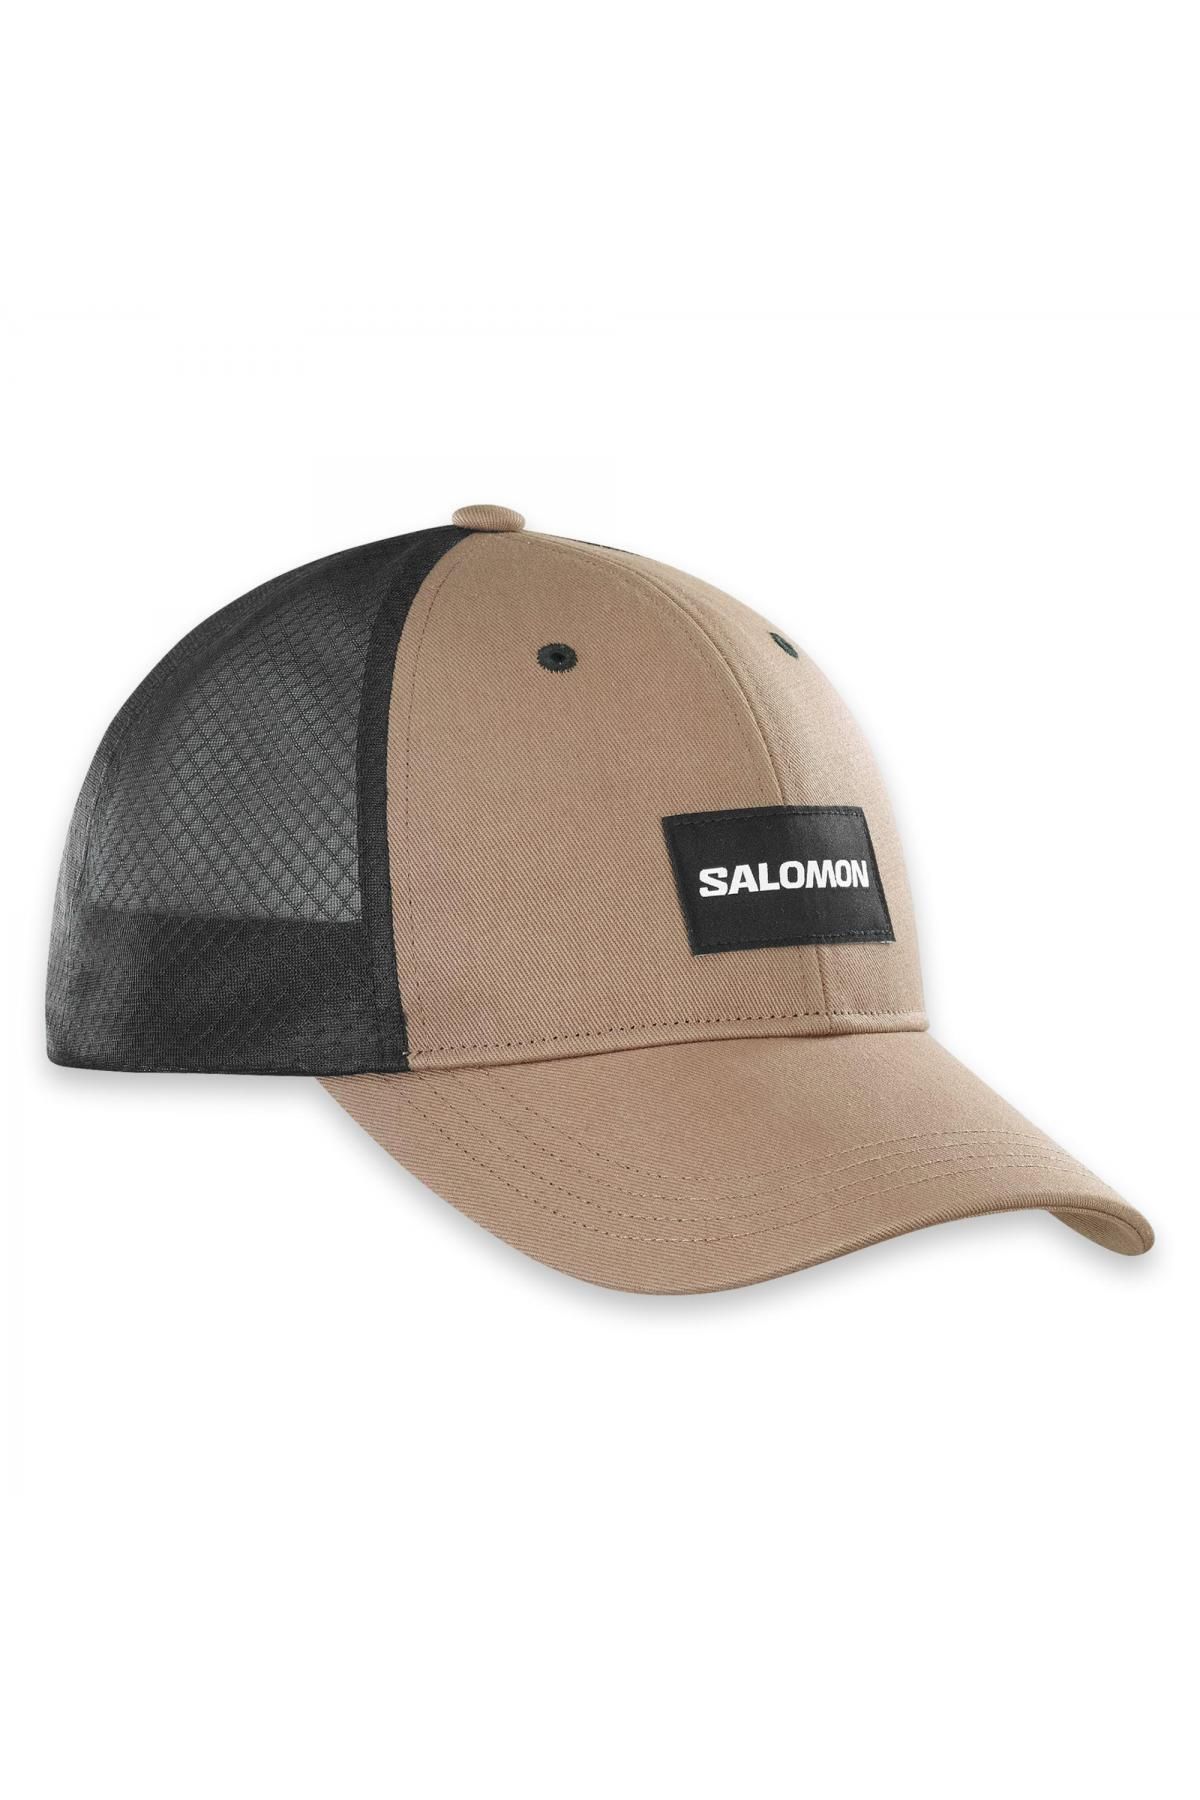 Salomon Lc2024100 Trucker Curved Cap Kahverengi Unisex Şapka